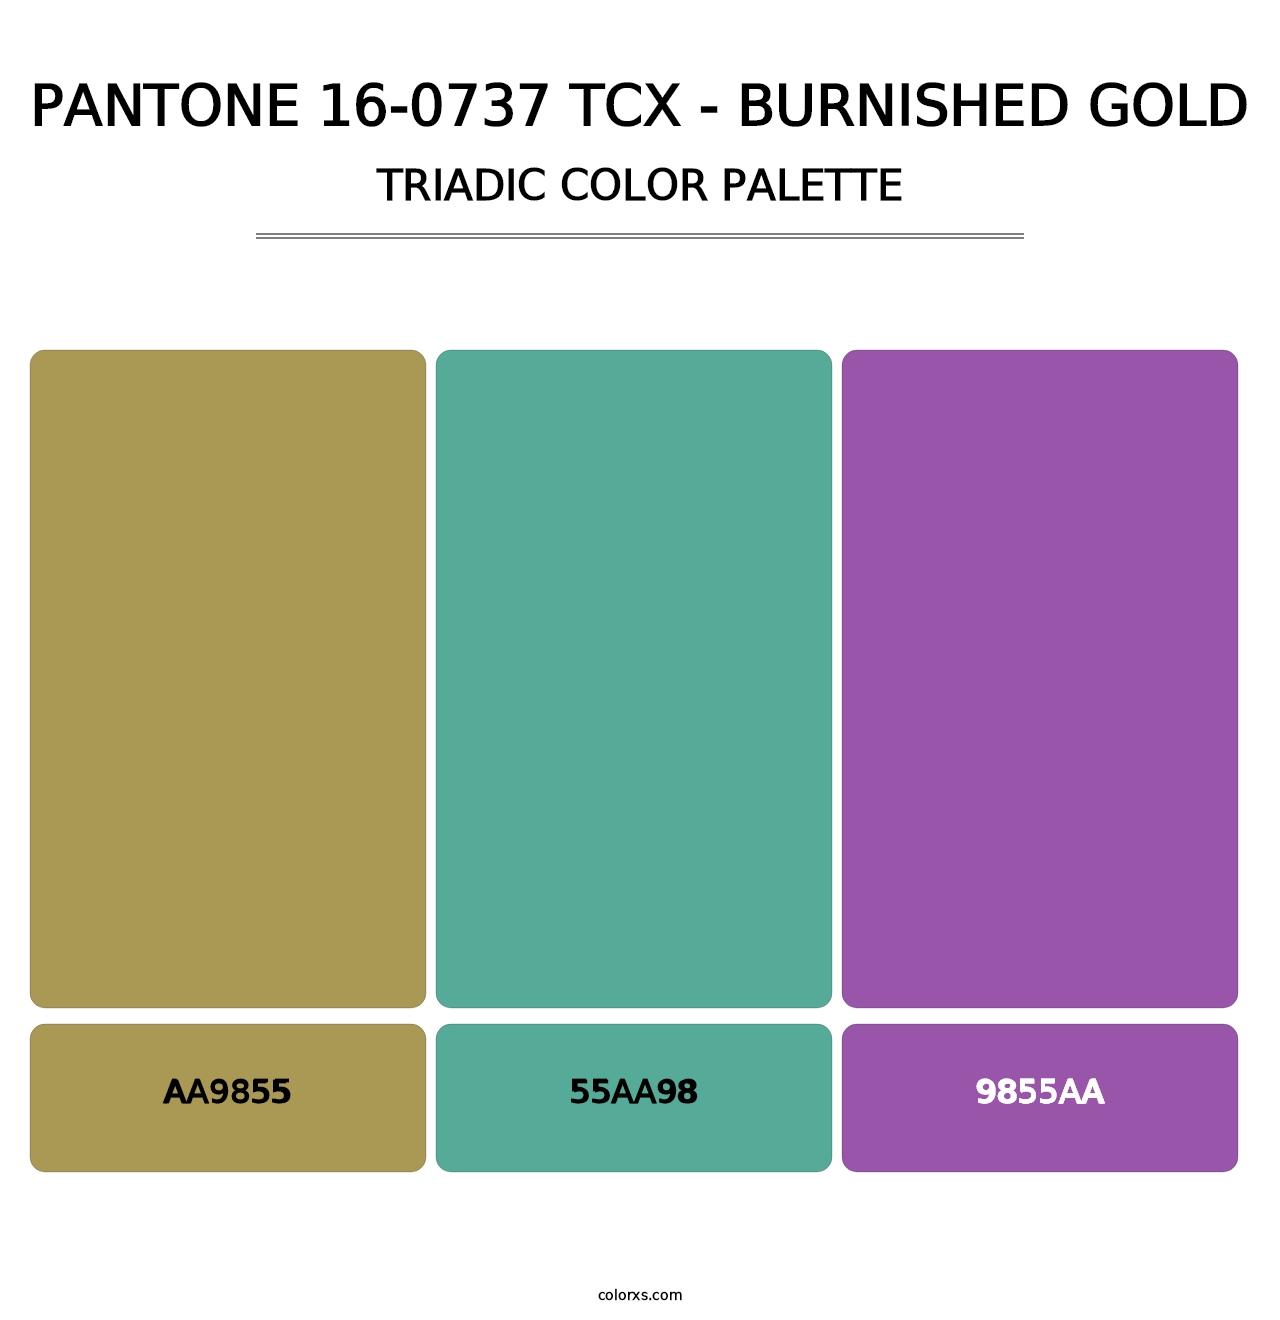 PANTONE 16-0737 TCX - Burnished Gold - Triadic Color Palette